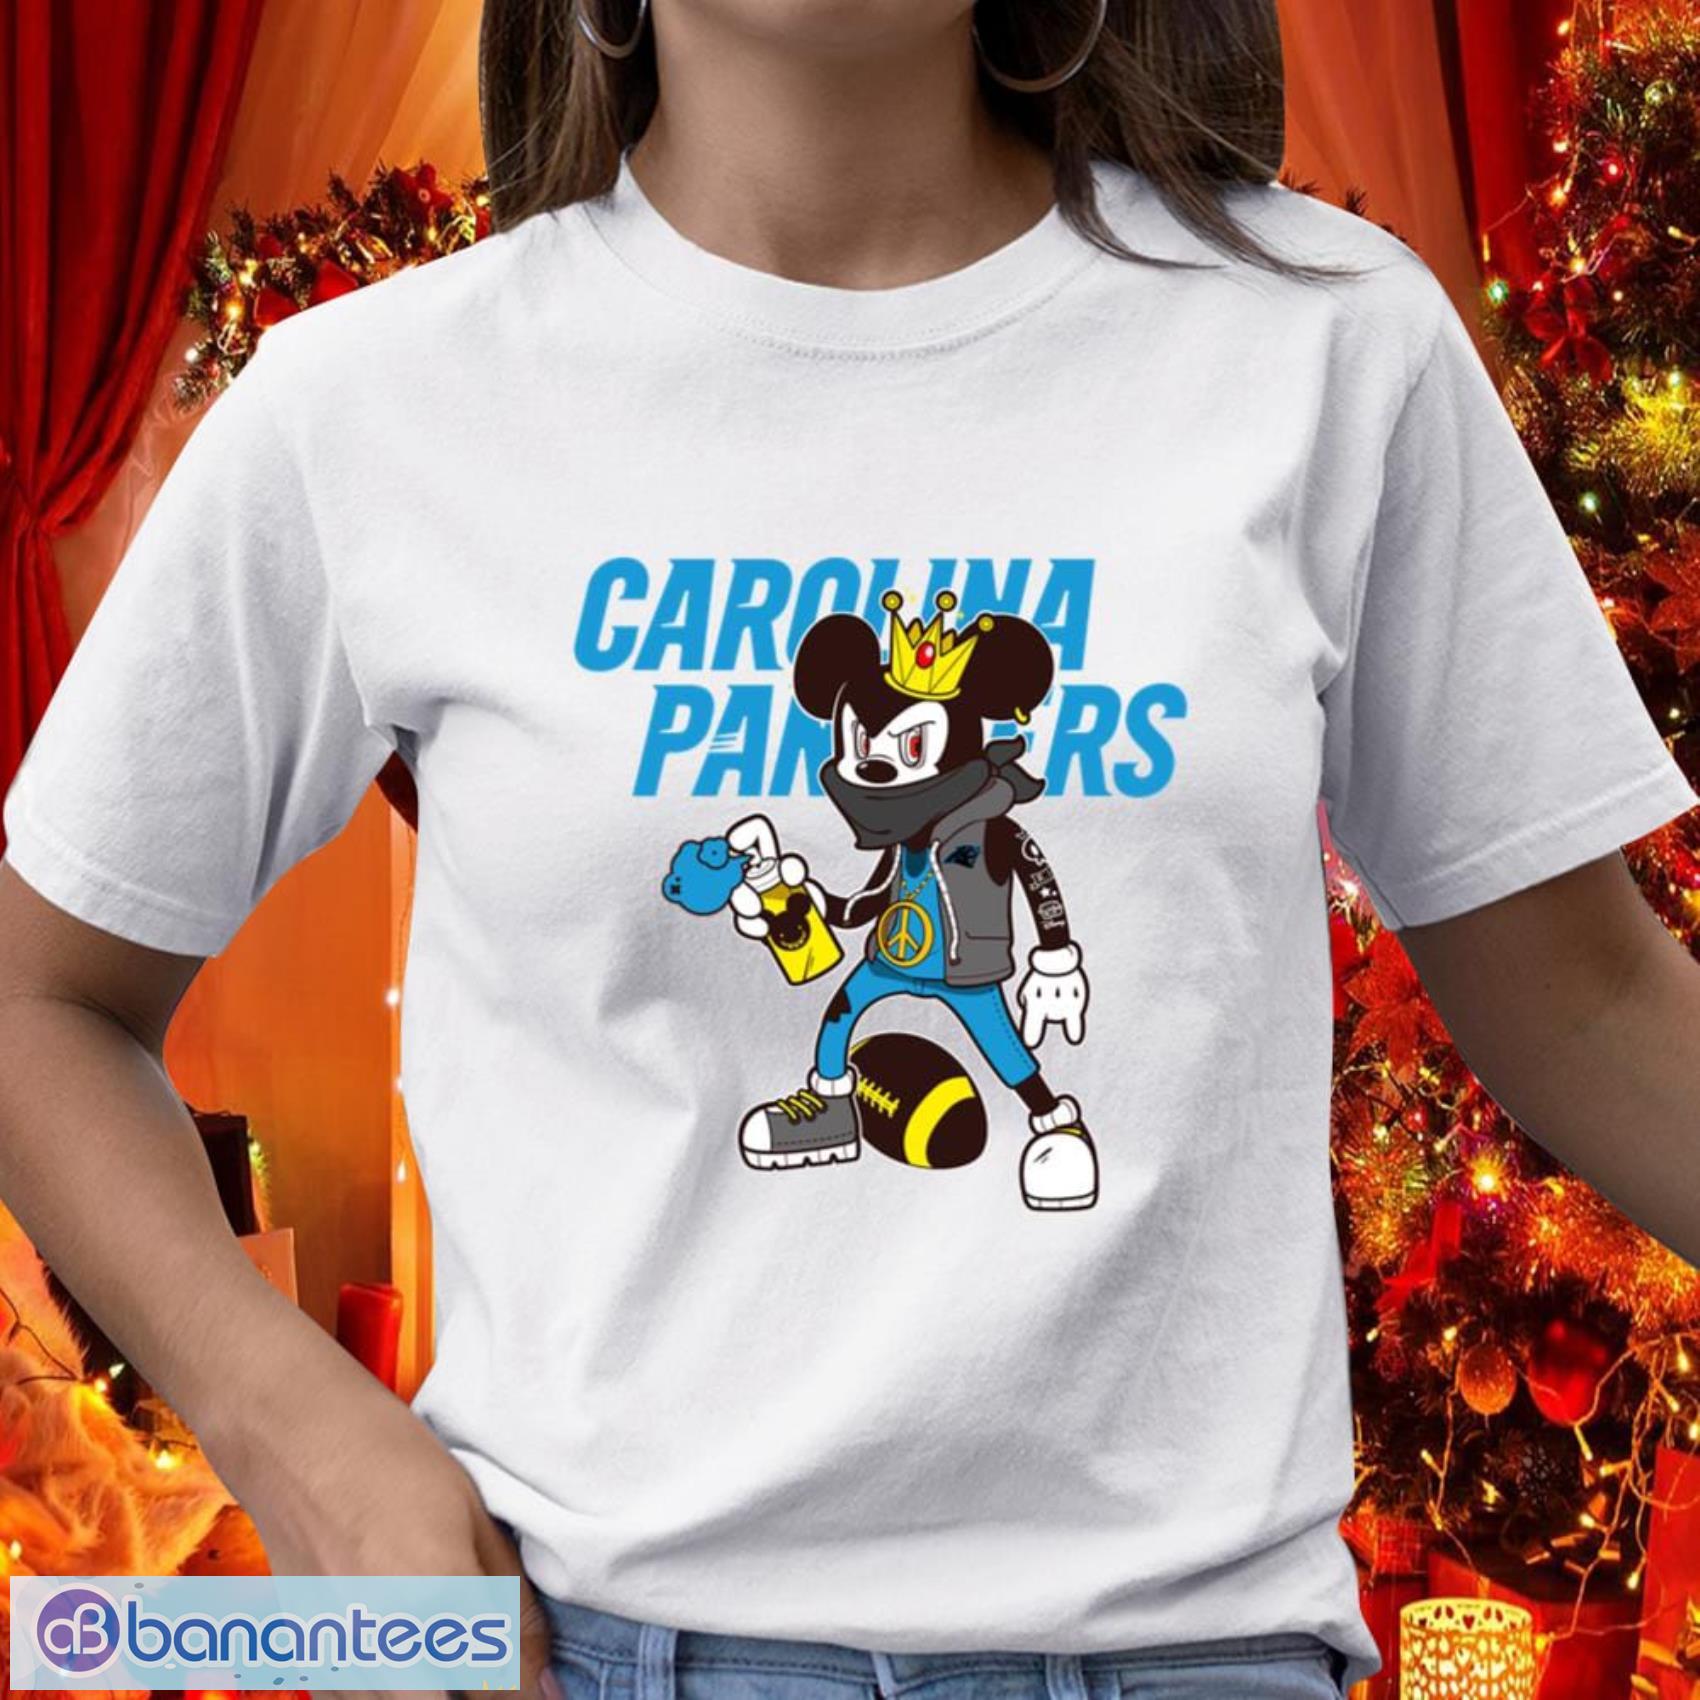 Carolina Panthers NFL Football Gift Fr Fans Mickey Peace Sign Sports T Shirt - Carolina Panthers NFL Football Mickey Peace Sign Sports T Shirt_1